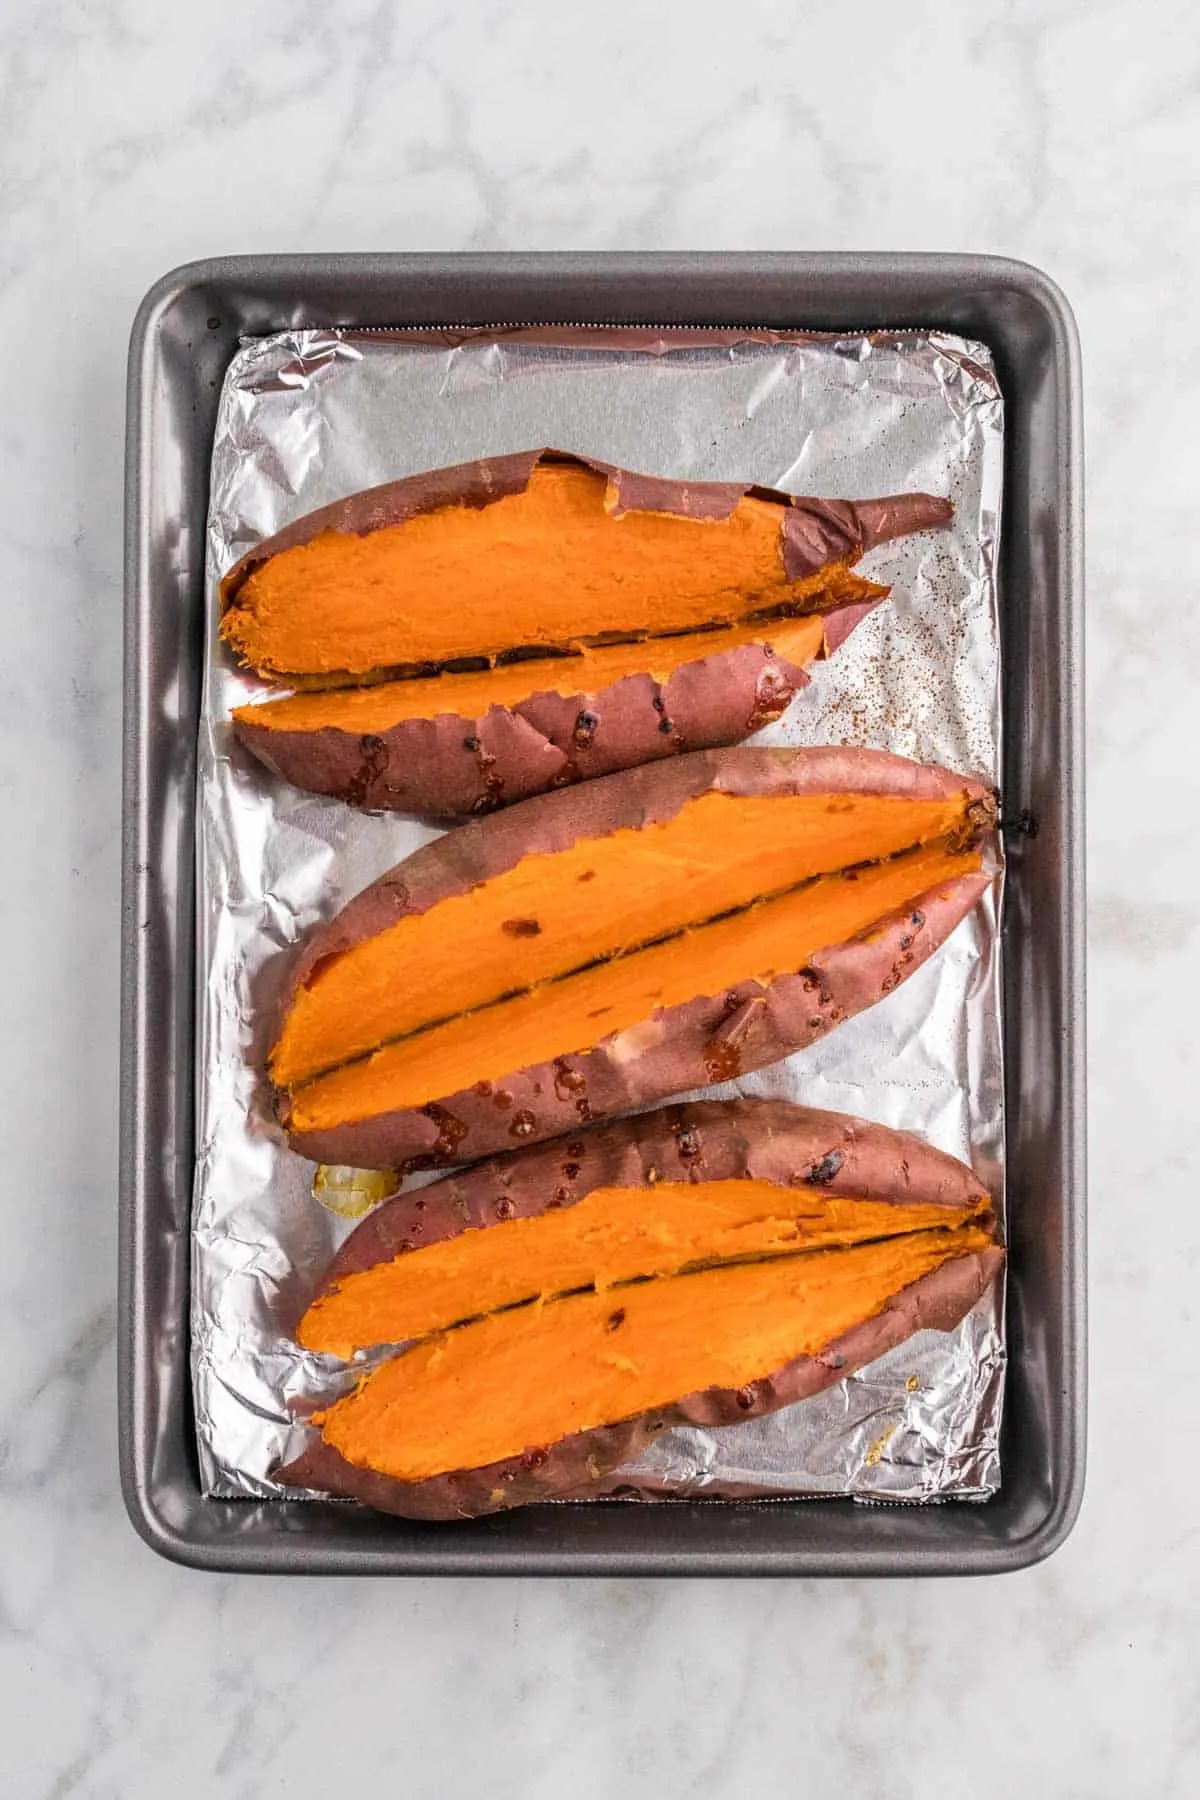 baked sweet potatoes sliced in half